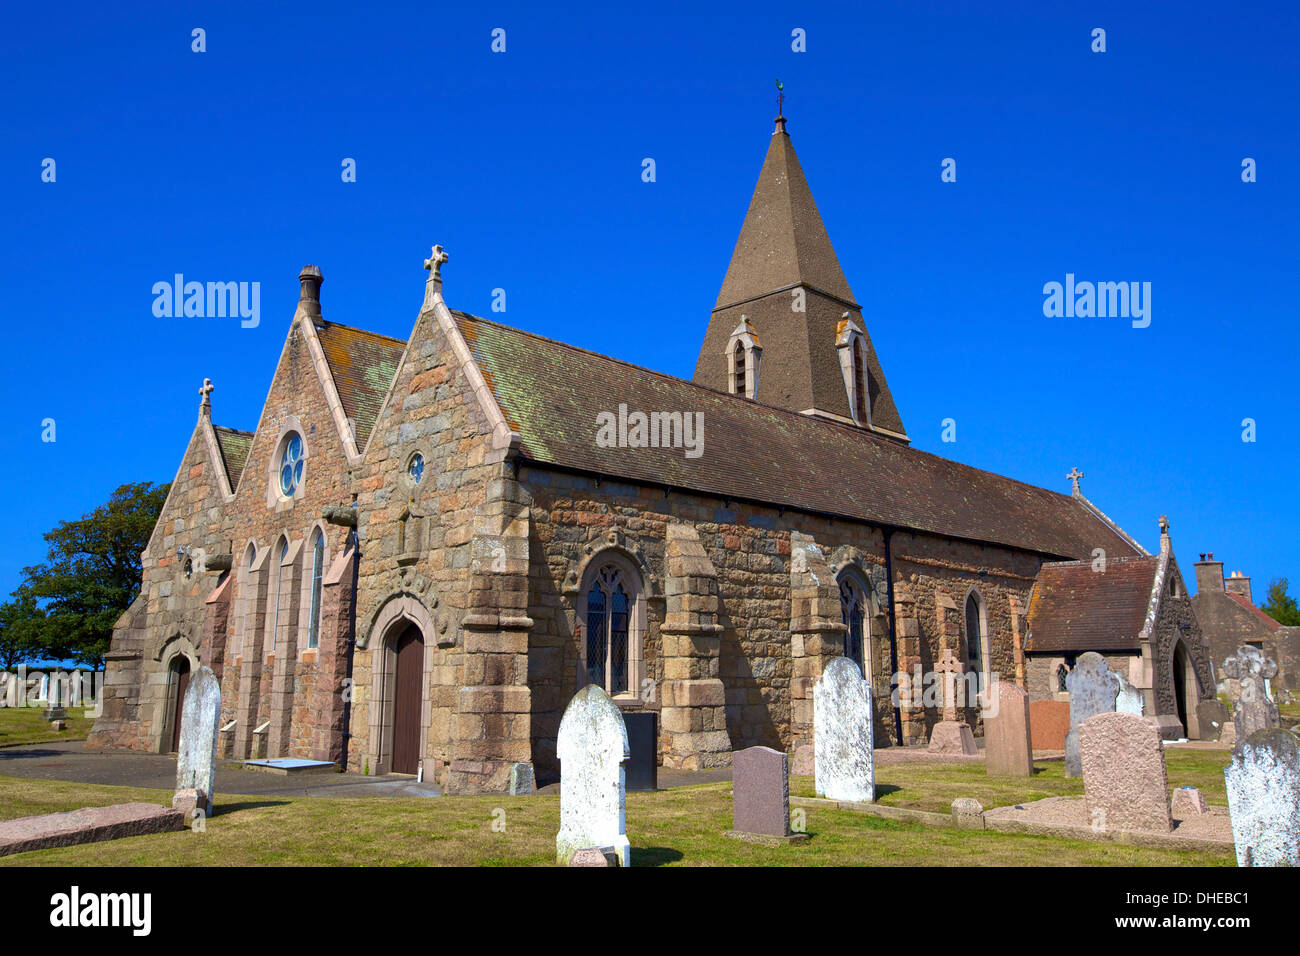 St. Ouen's Church, St. Ouen, Jersey, Channel Islands, Europe Stock Photo